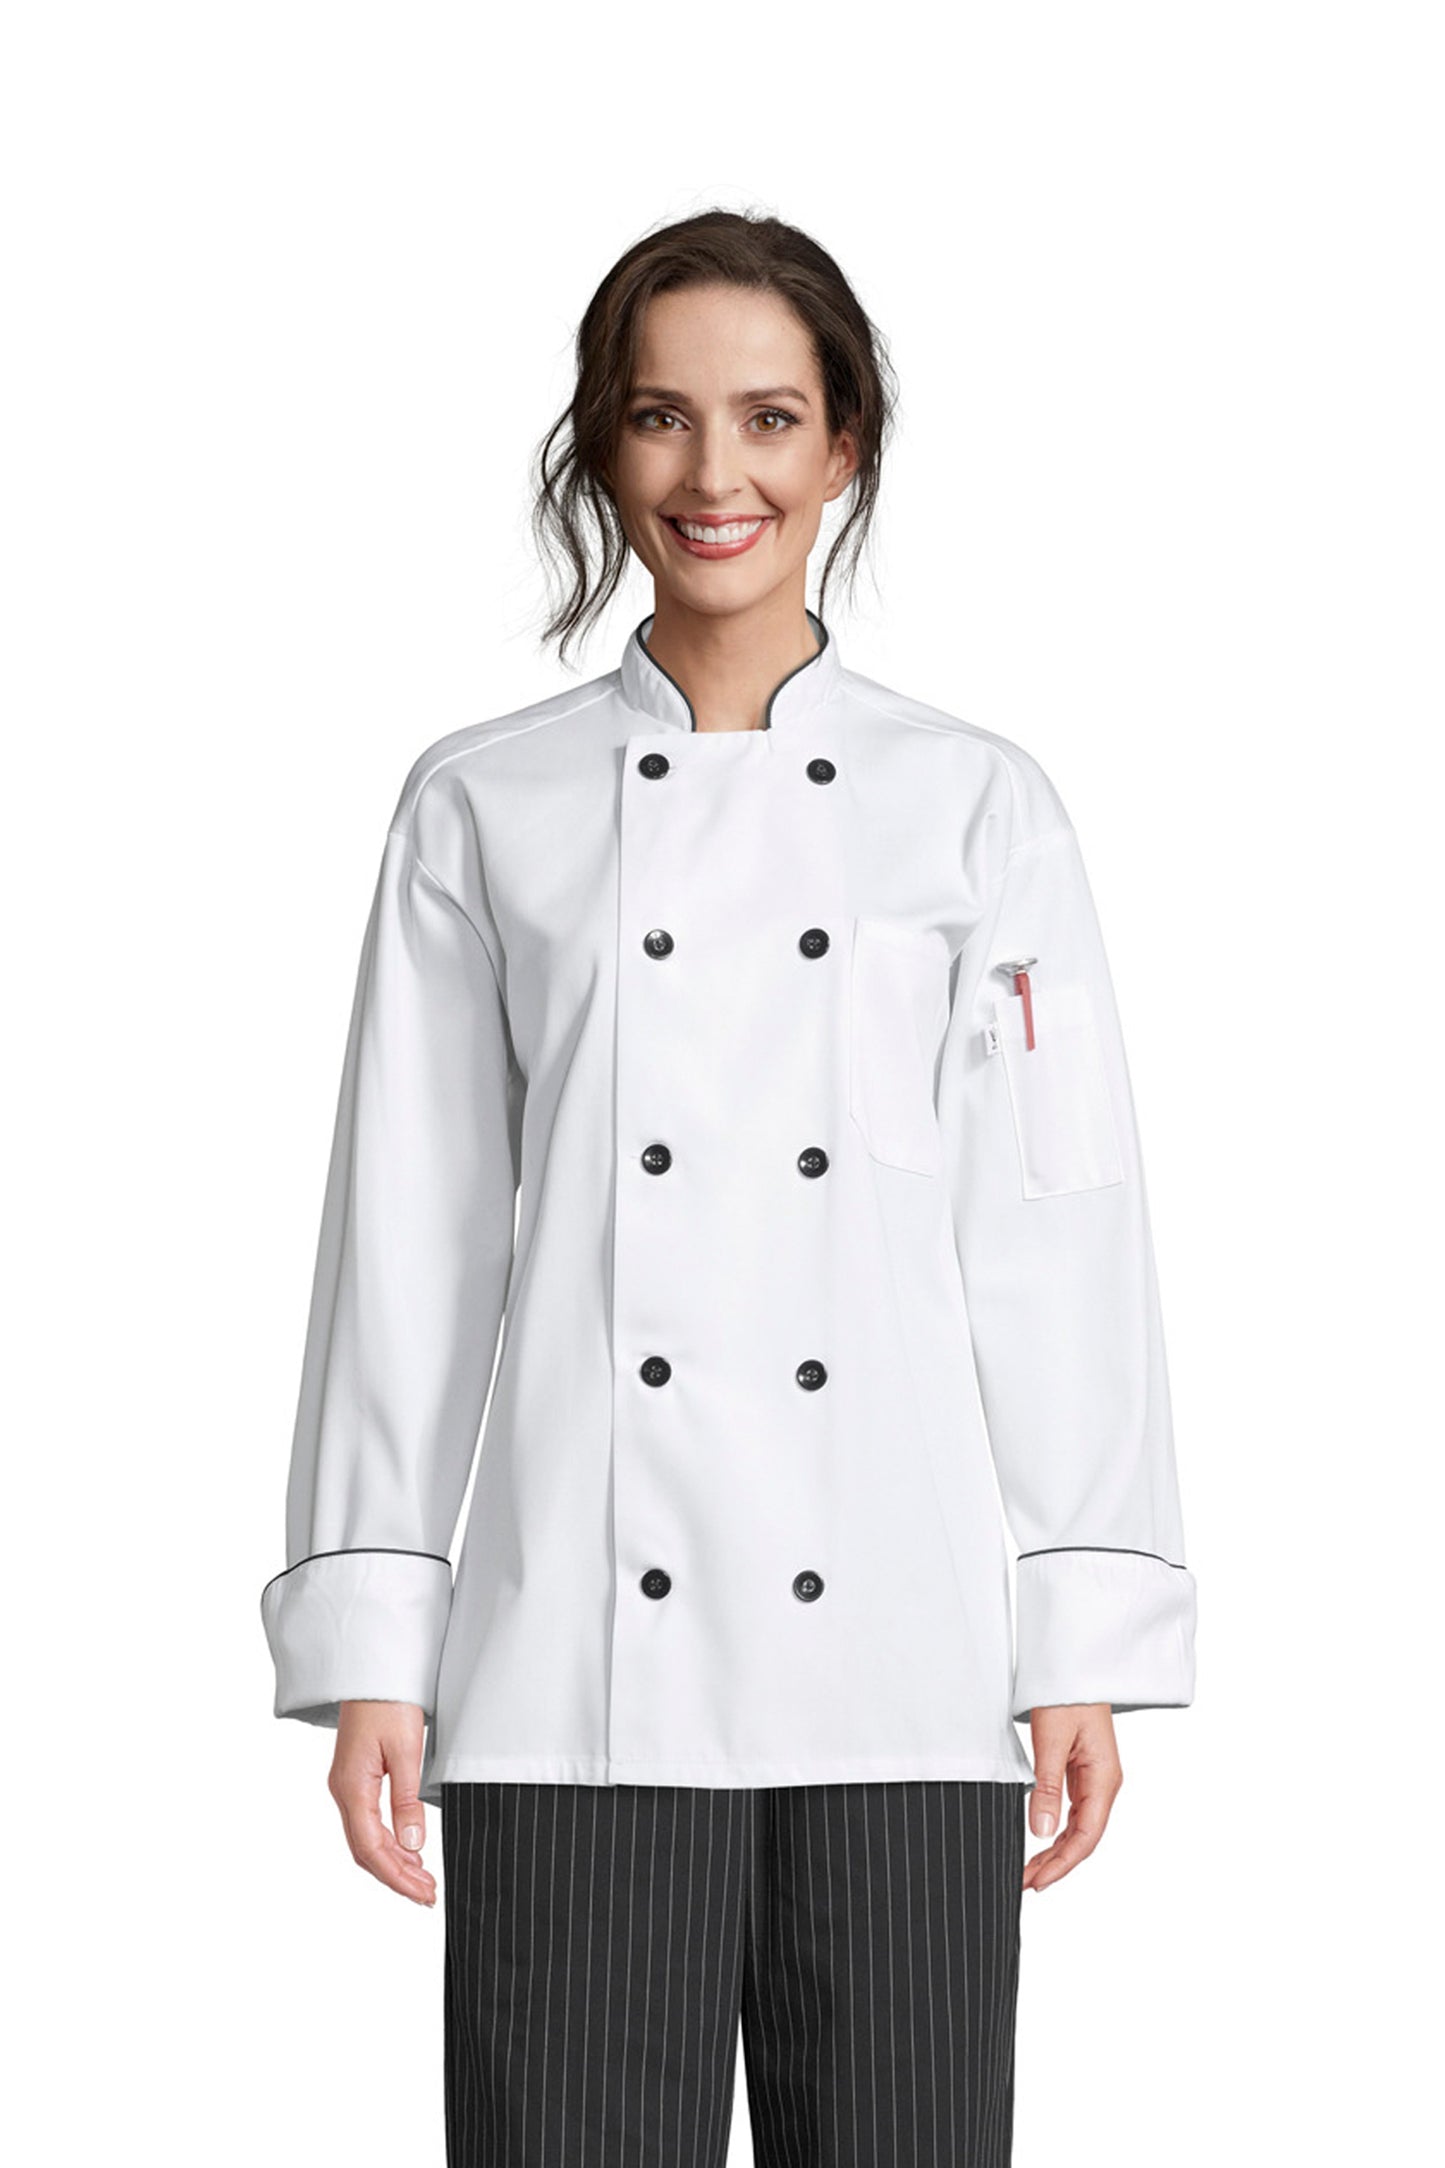 Madrid Chef Coat #0407 *Closeout* (All Sales Final No Returns)